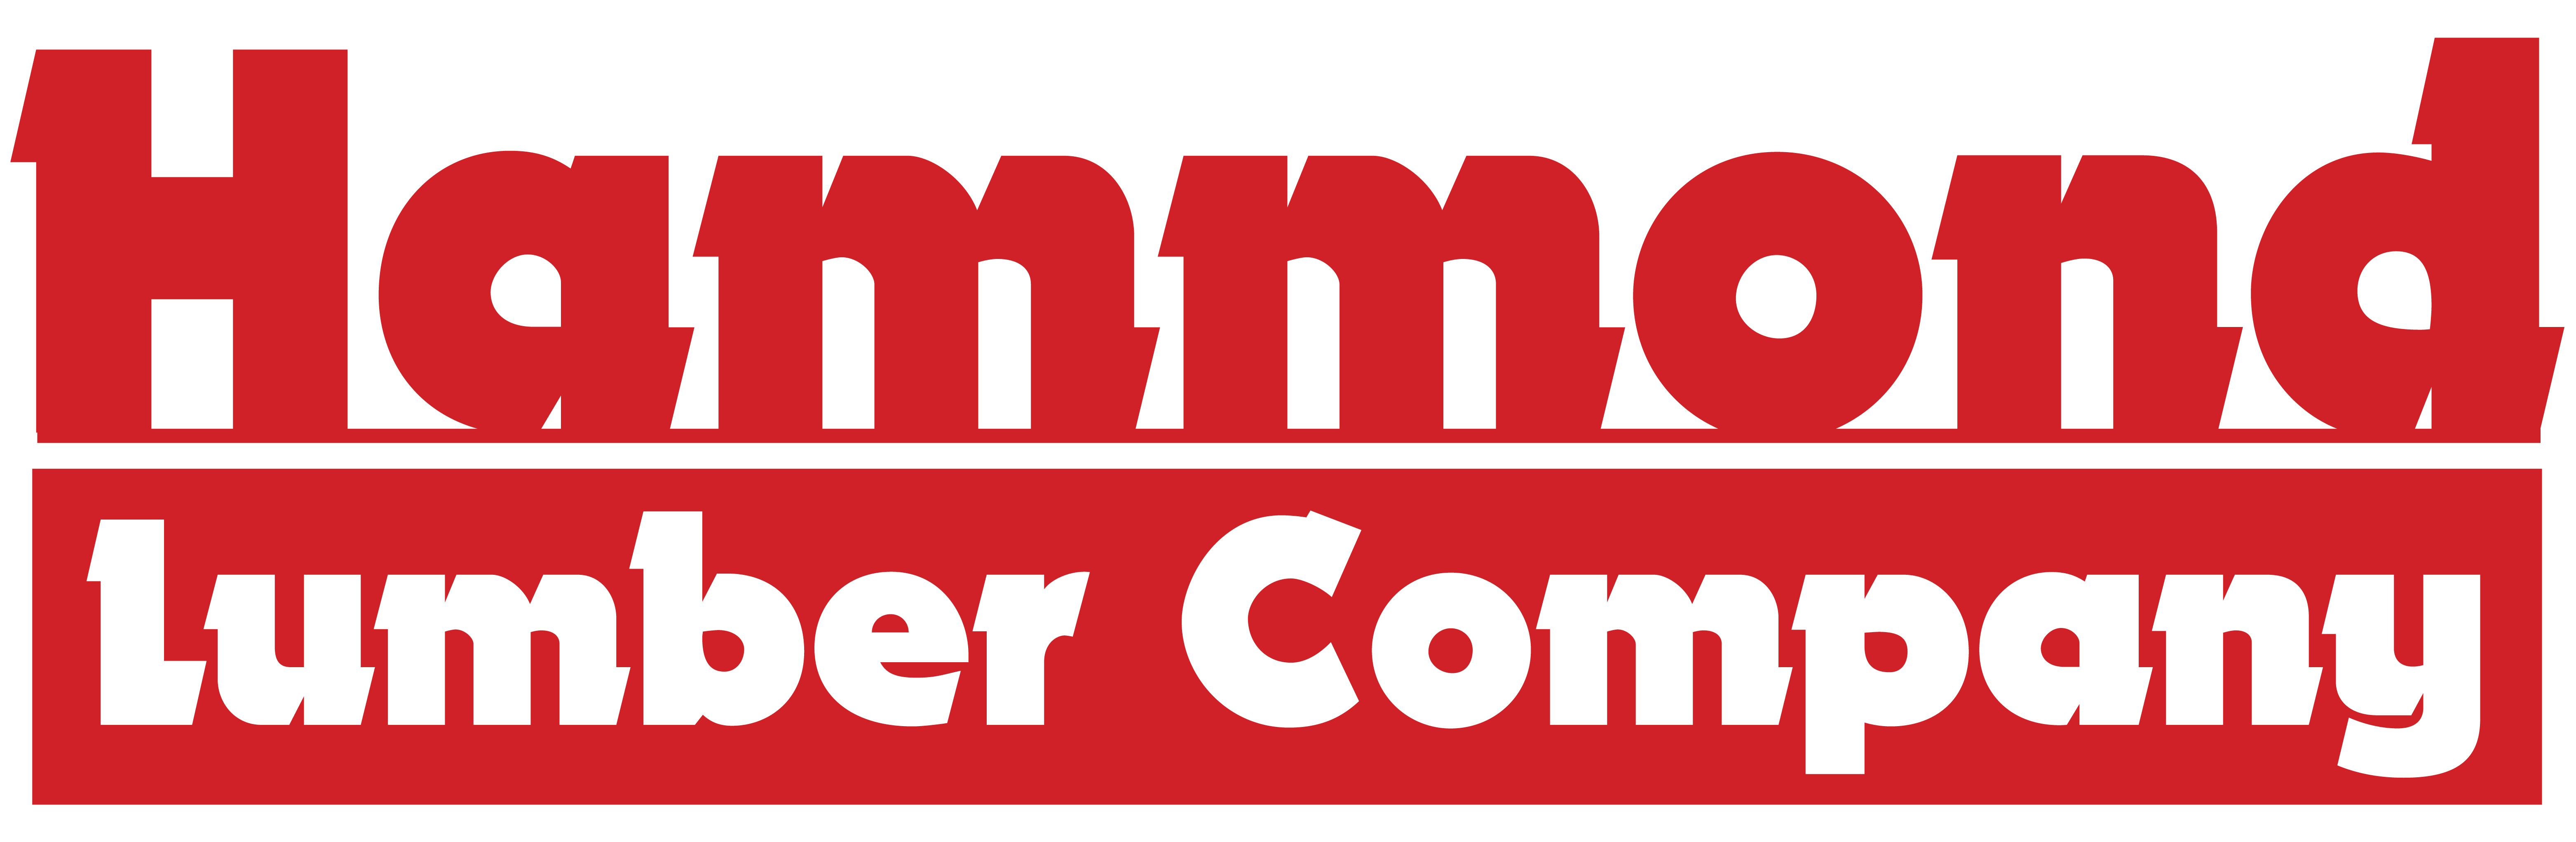 Hammond Lumber Company 